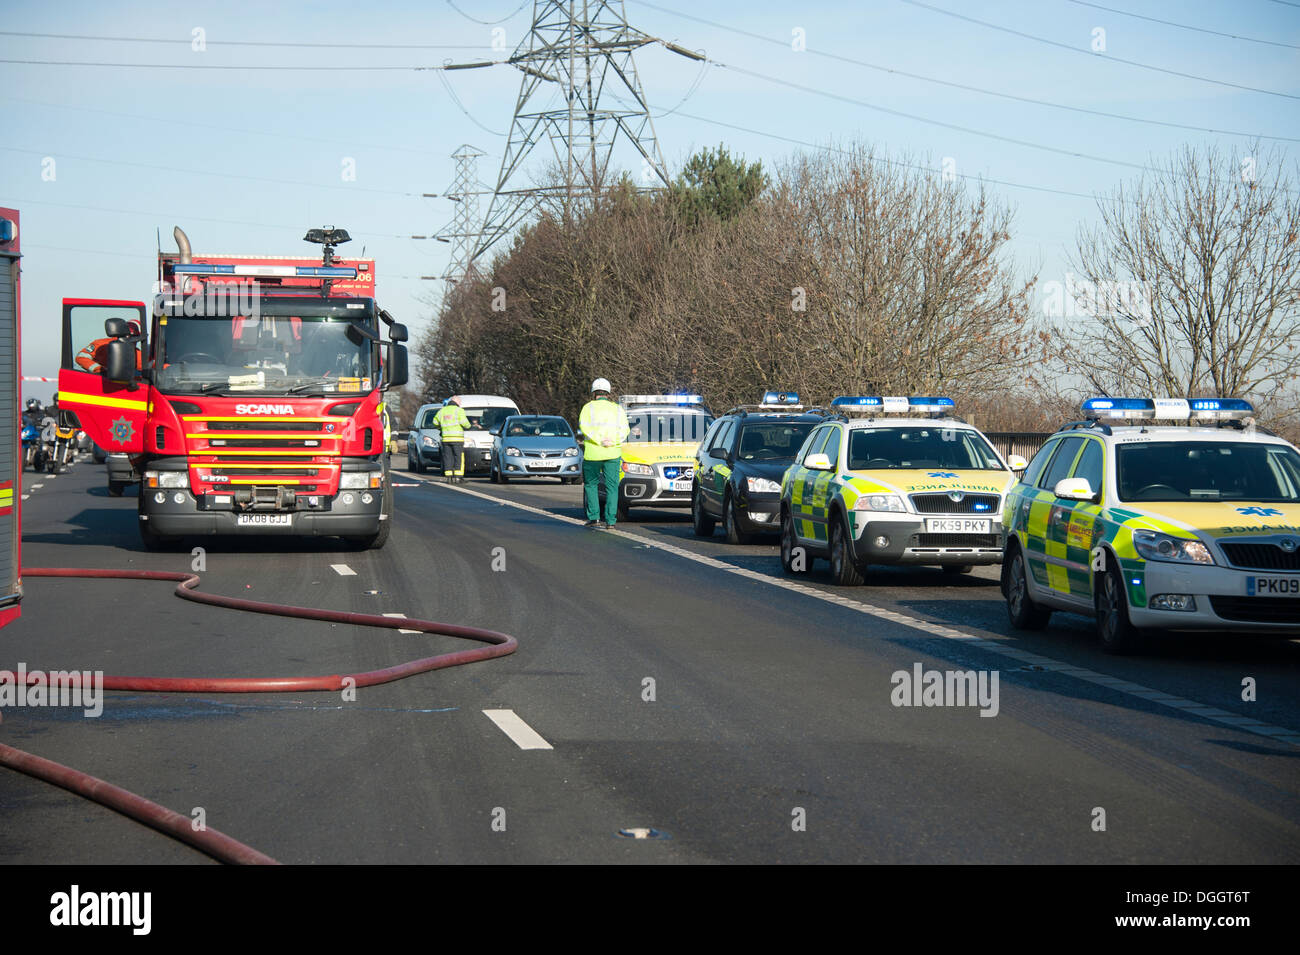 Ambulances and Fire Engines on Motorway freeway Stock Photo